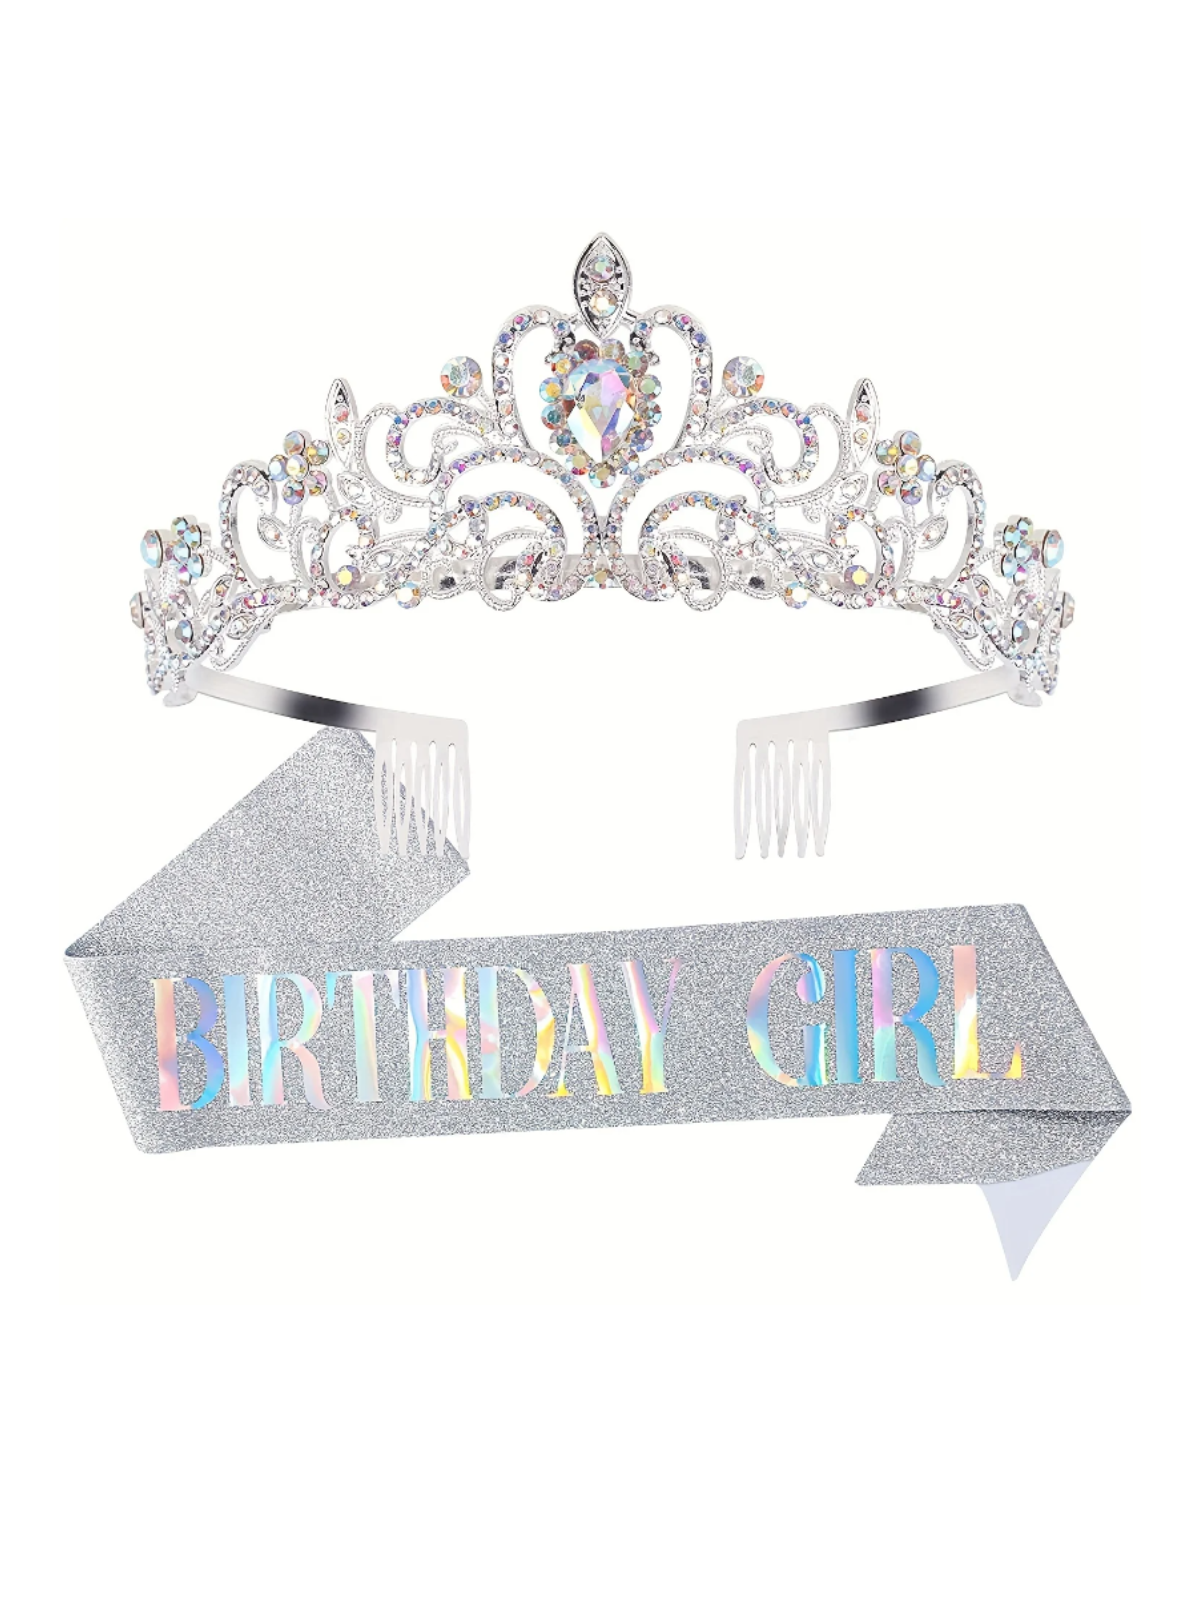 Birthday Queen Accessory Kit - Rhinestone Crown and Glitter Sash